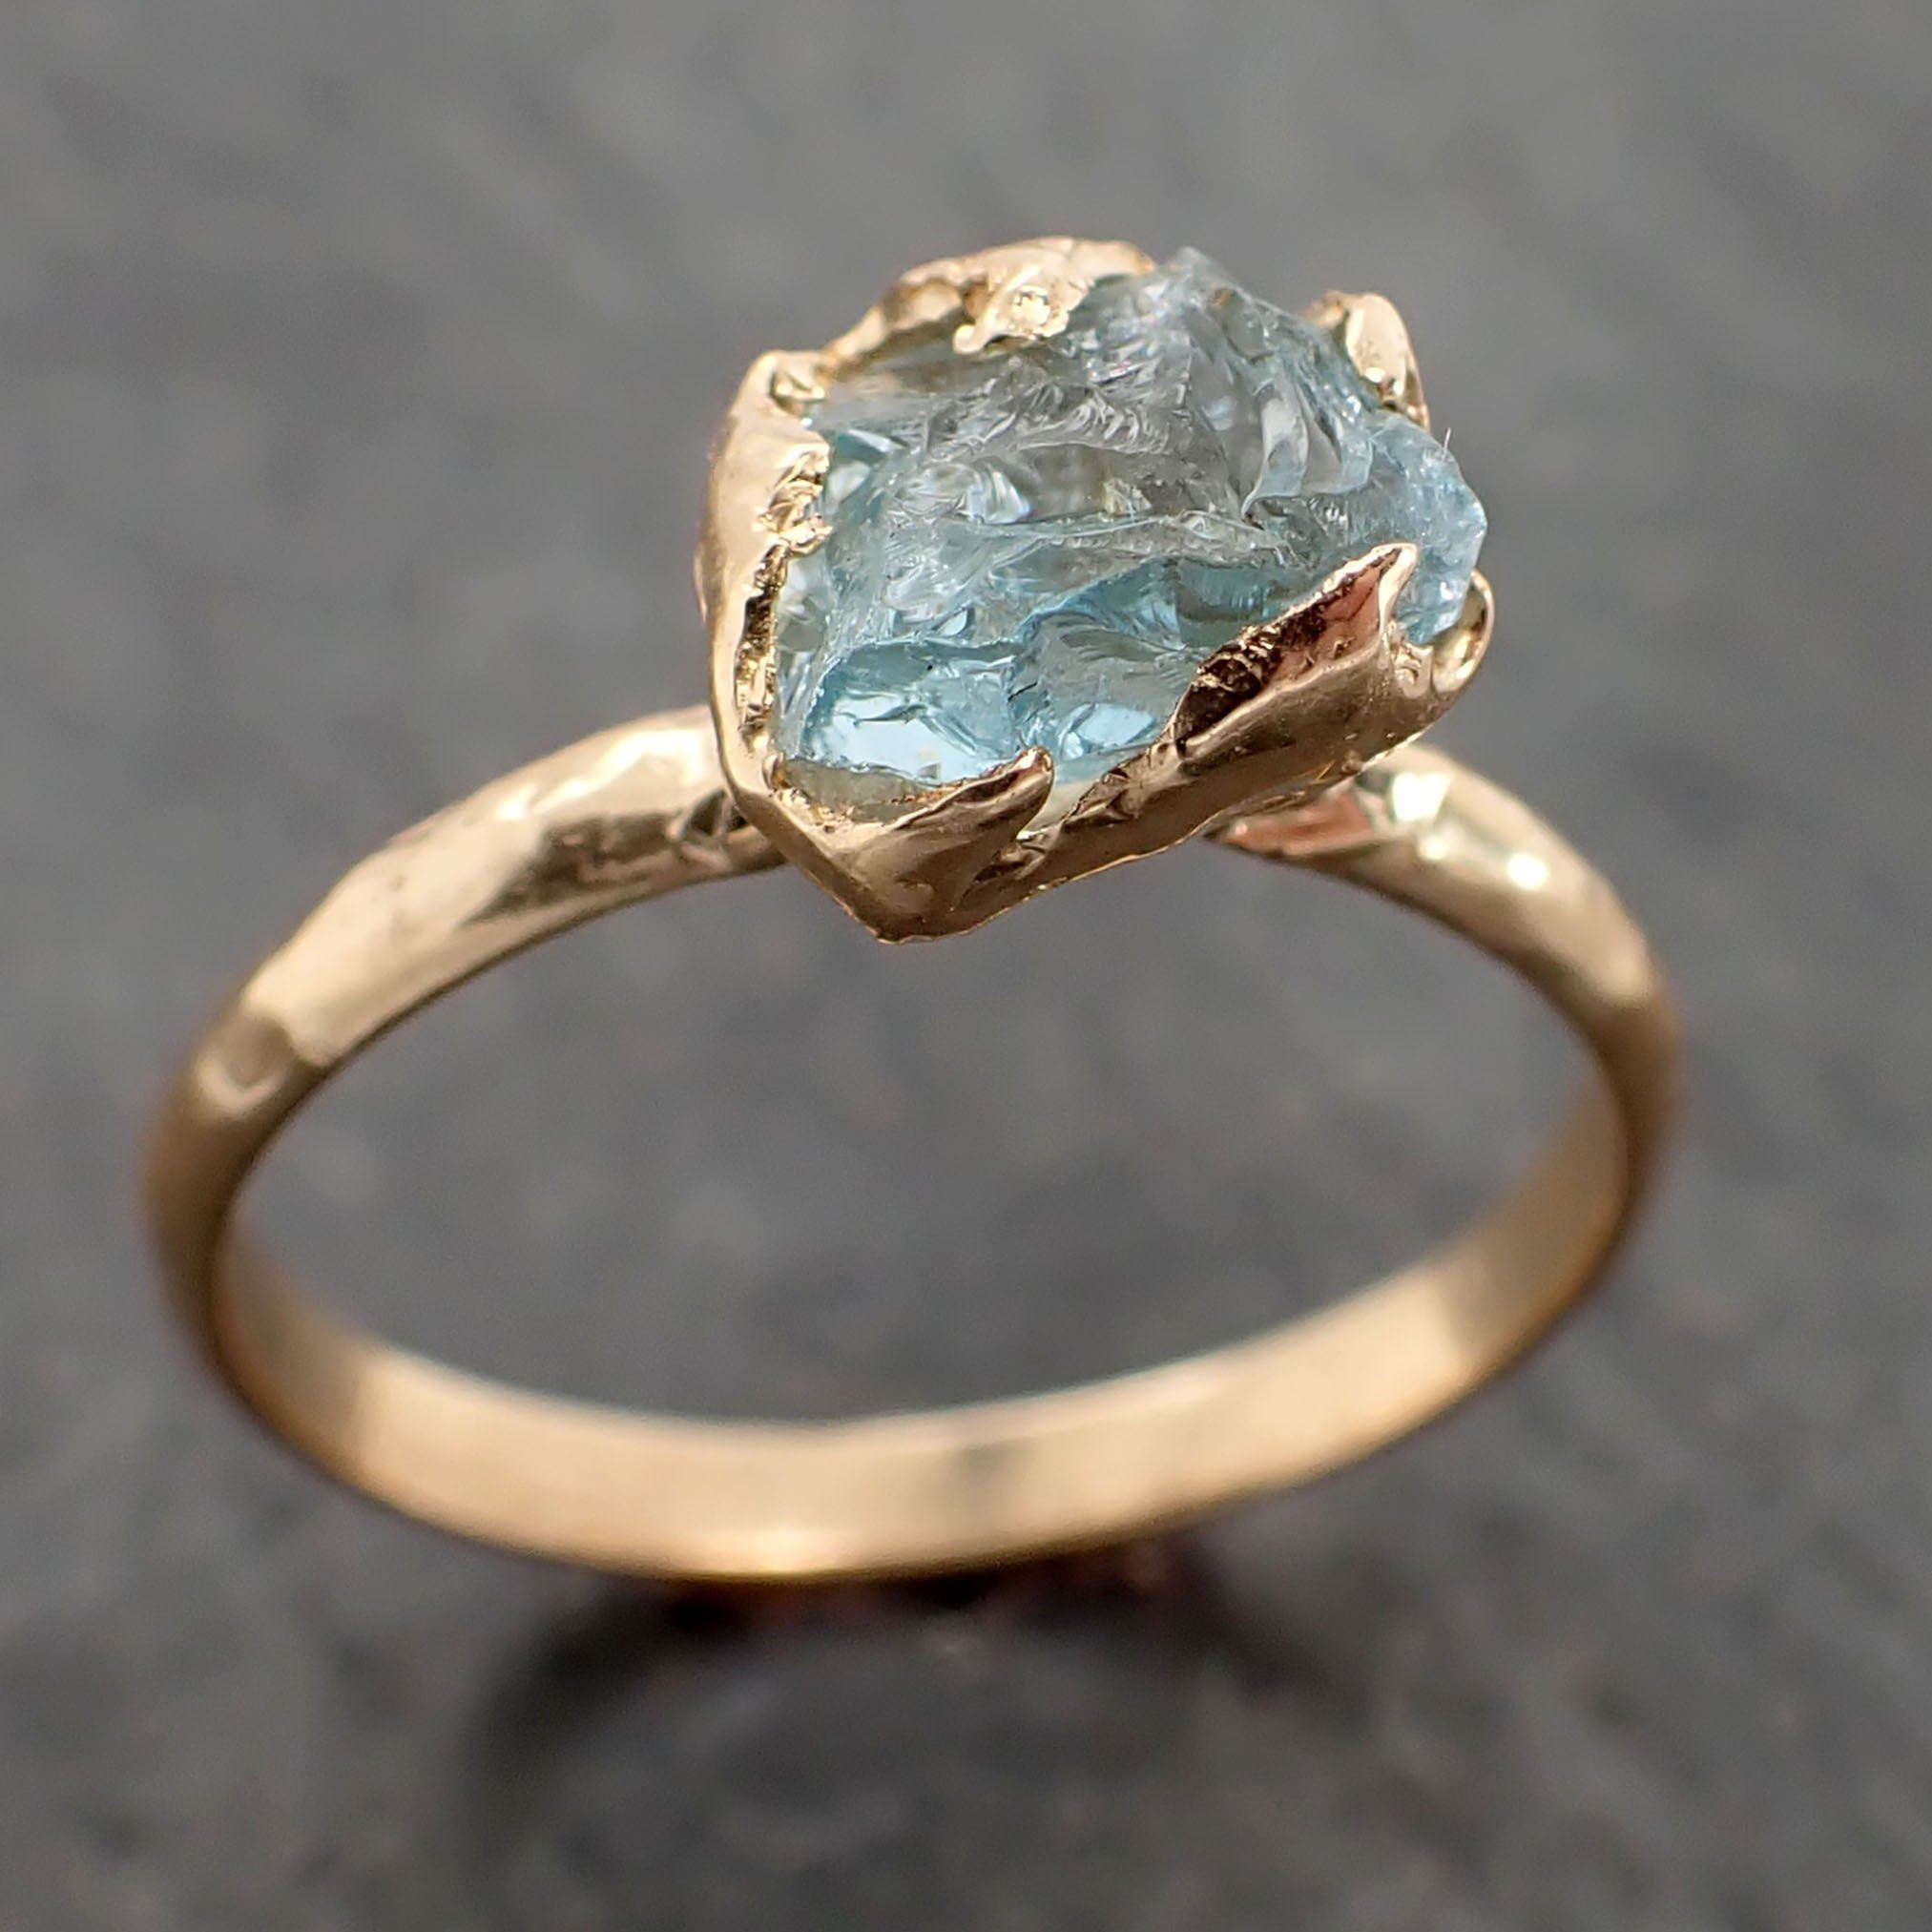 raw uncut aquamarine solitaire 14k yellow gold ring custom one of a kind gemstone ring bespoke byangeline 2166 Alternative Engagement